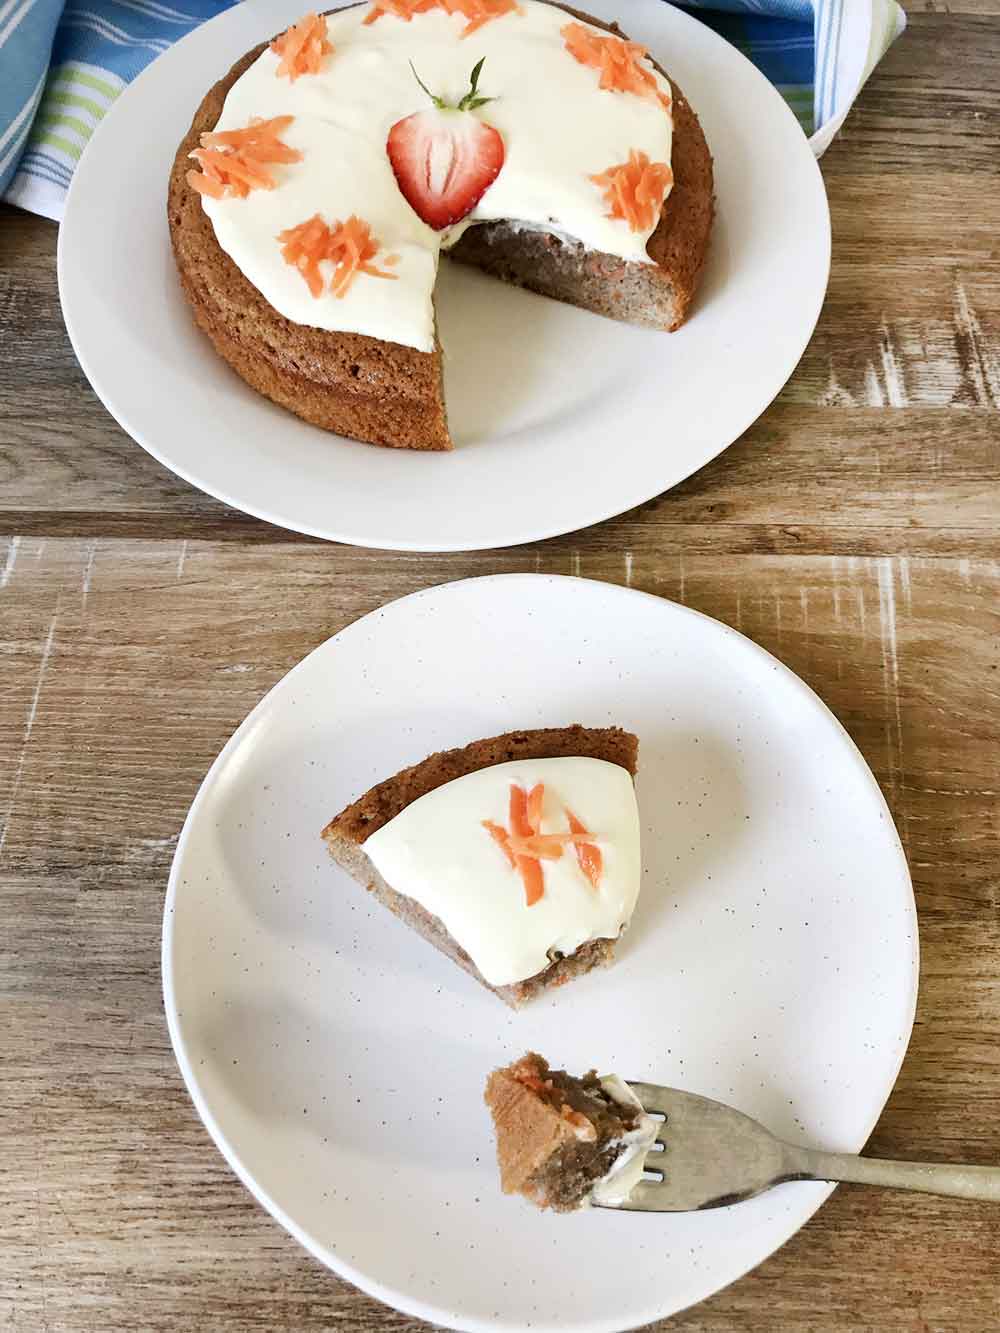 Eat a slice of gluten-free, almond flour carrot cake.